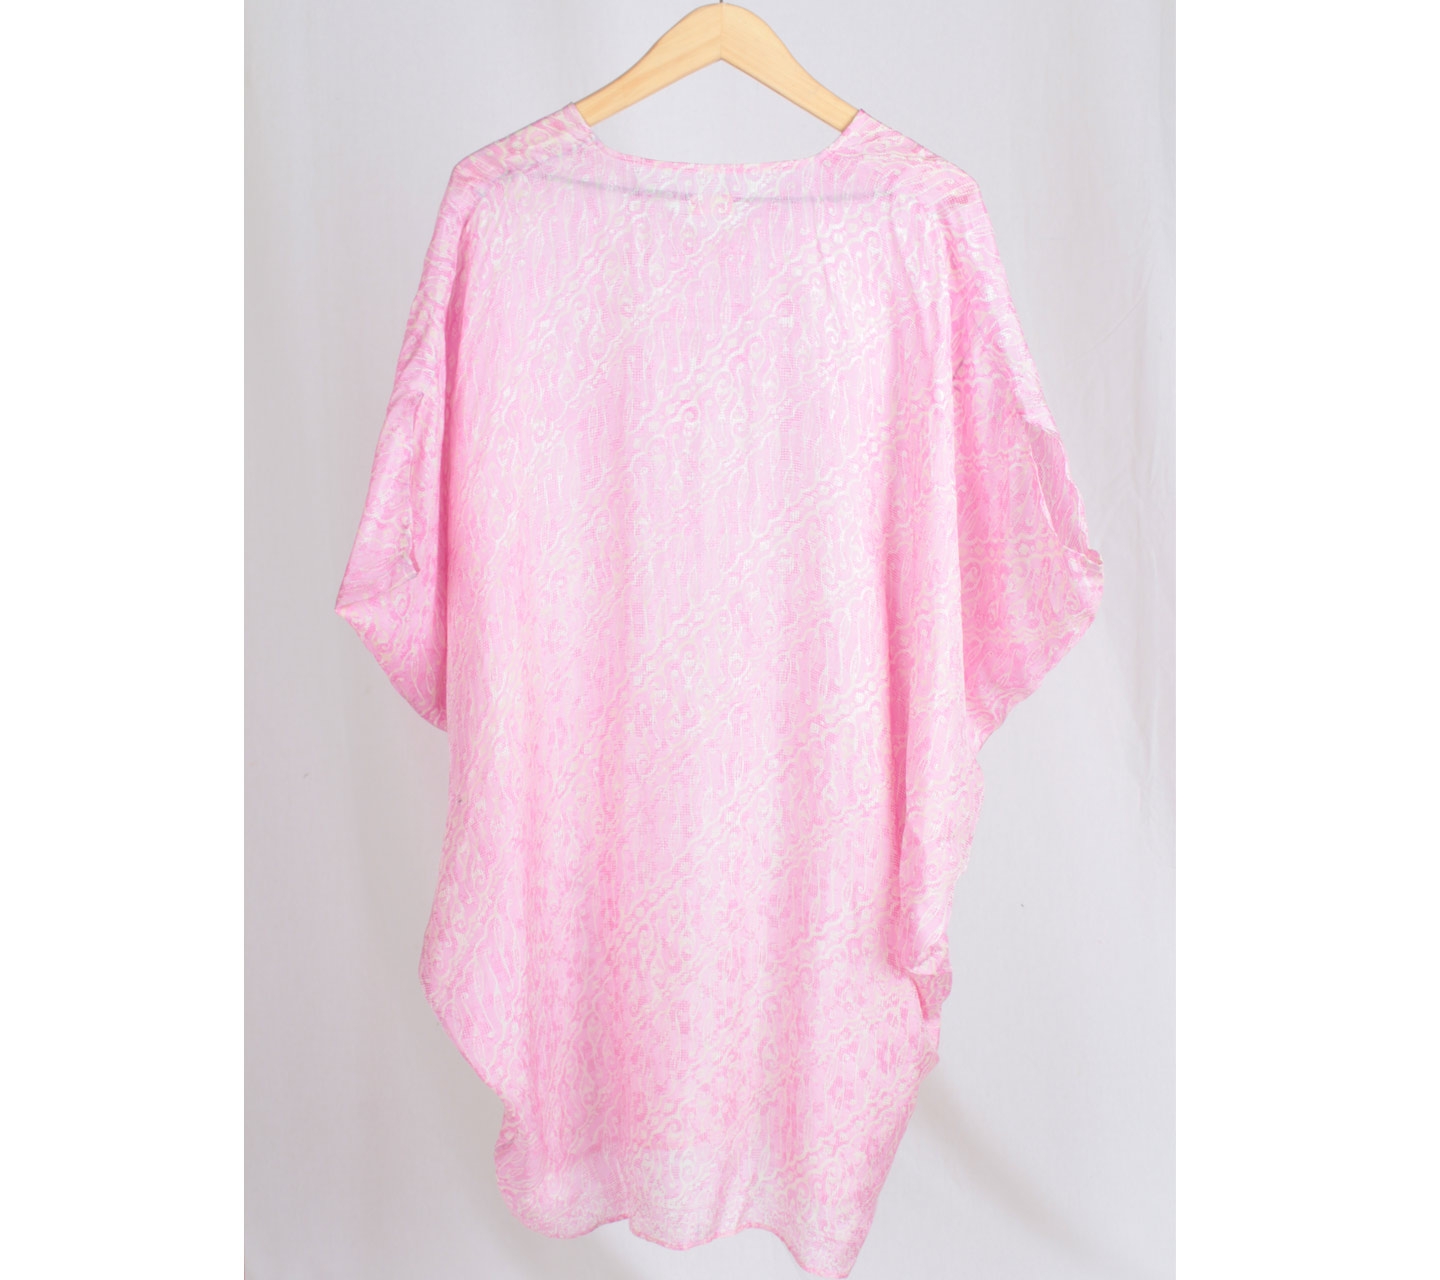 Kaetnik Pink And Cream Batwing Mini Dress